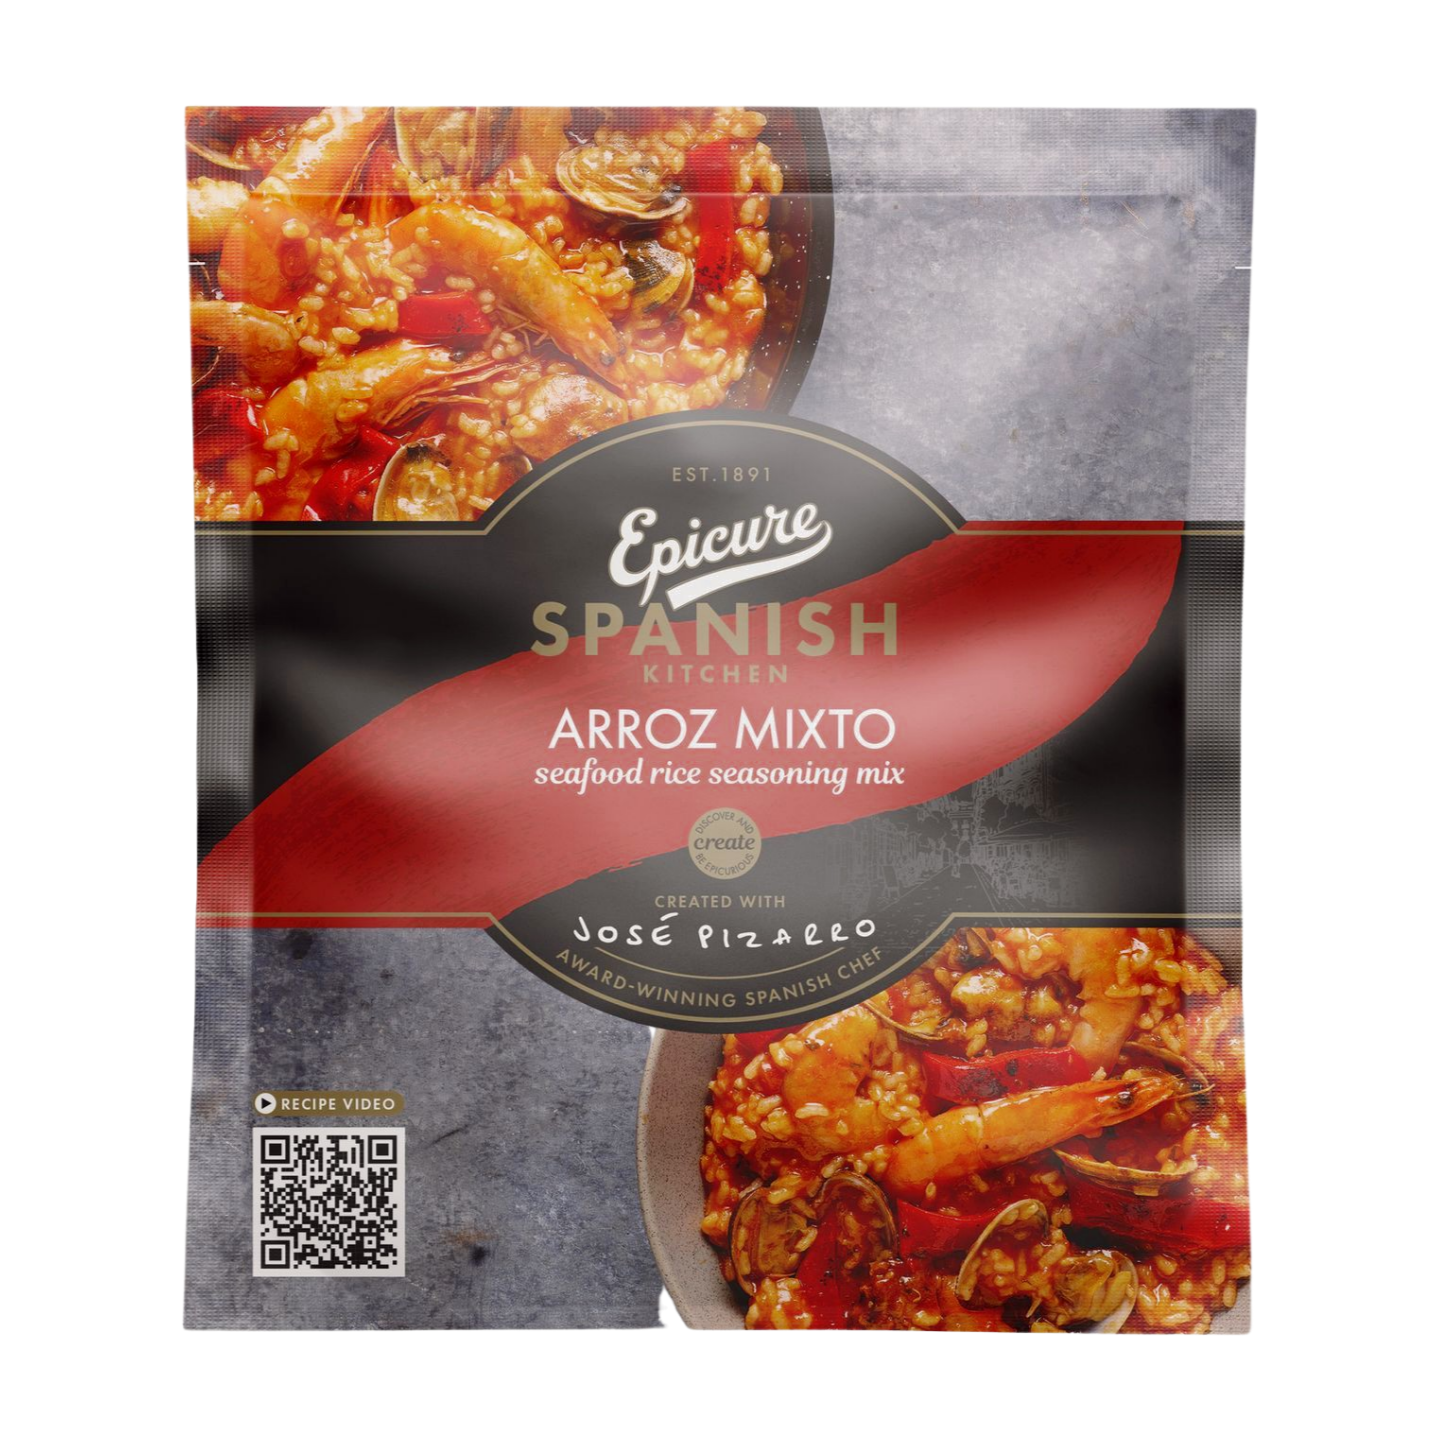 Epicure Arroz Mixto 'Seafood Rice' Seasoning Mix (18x30g)